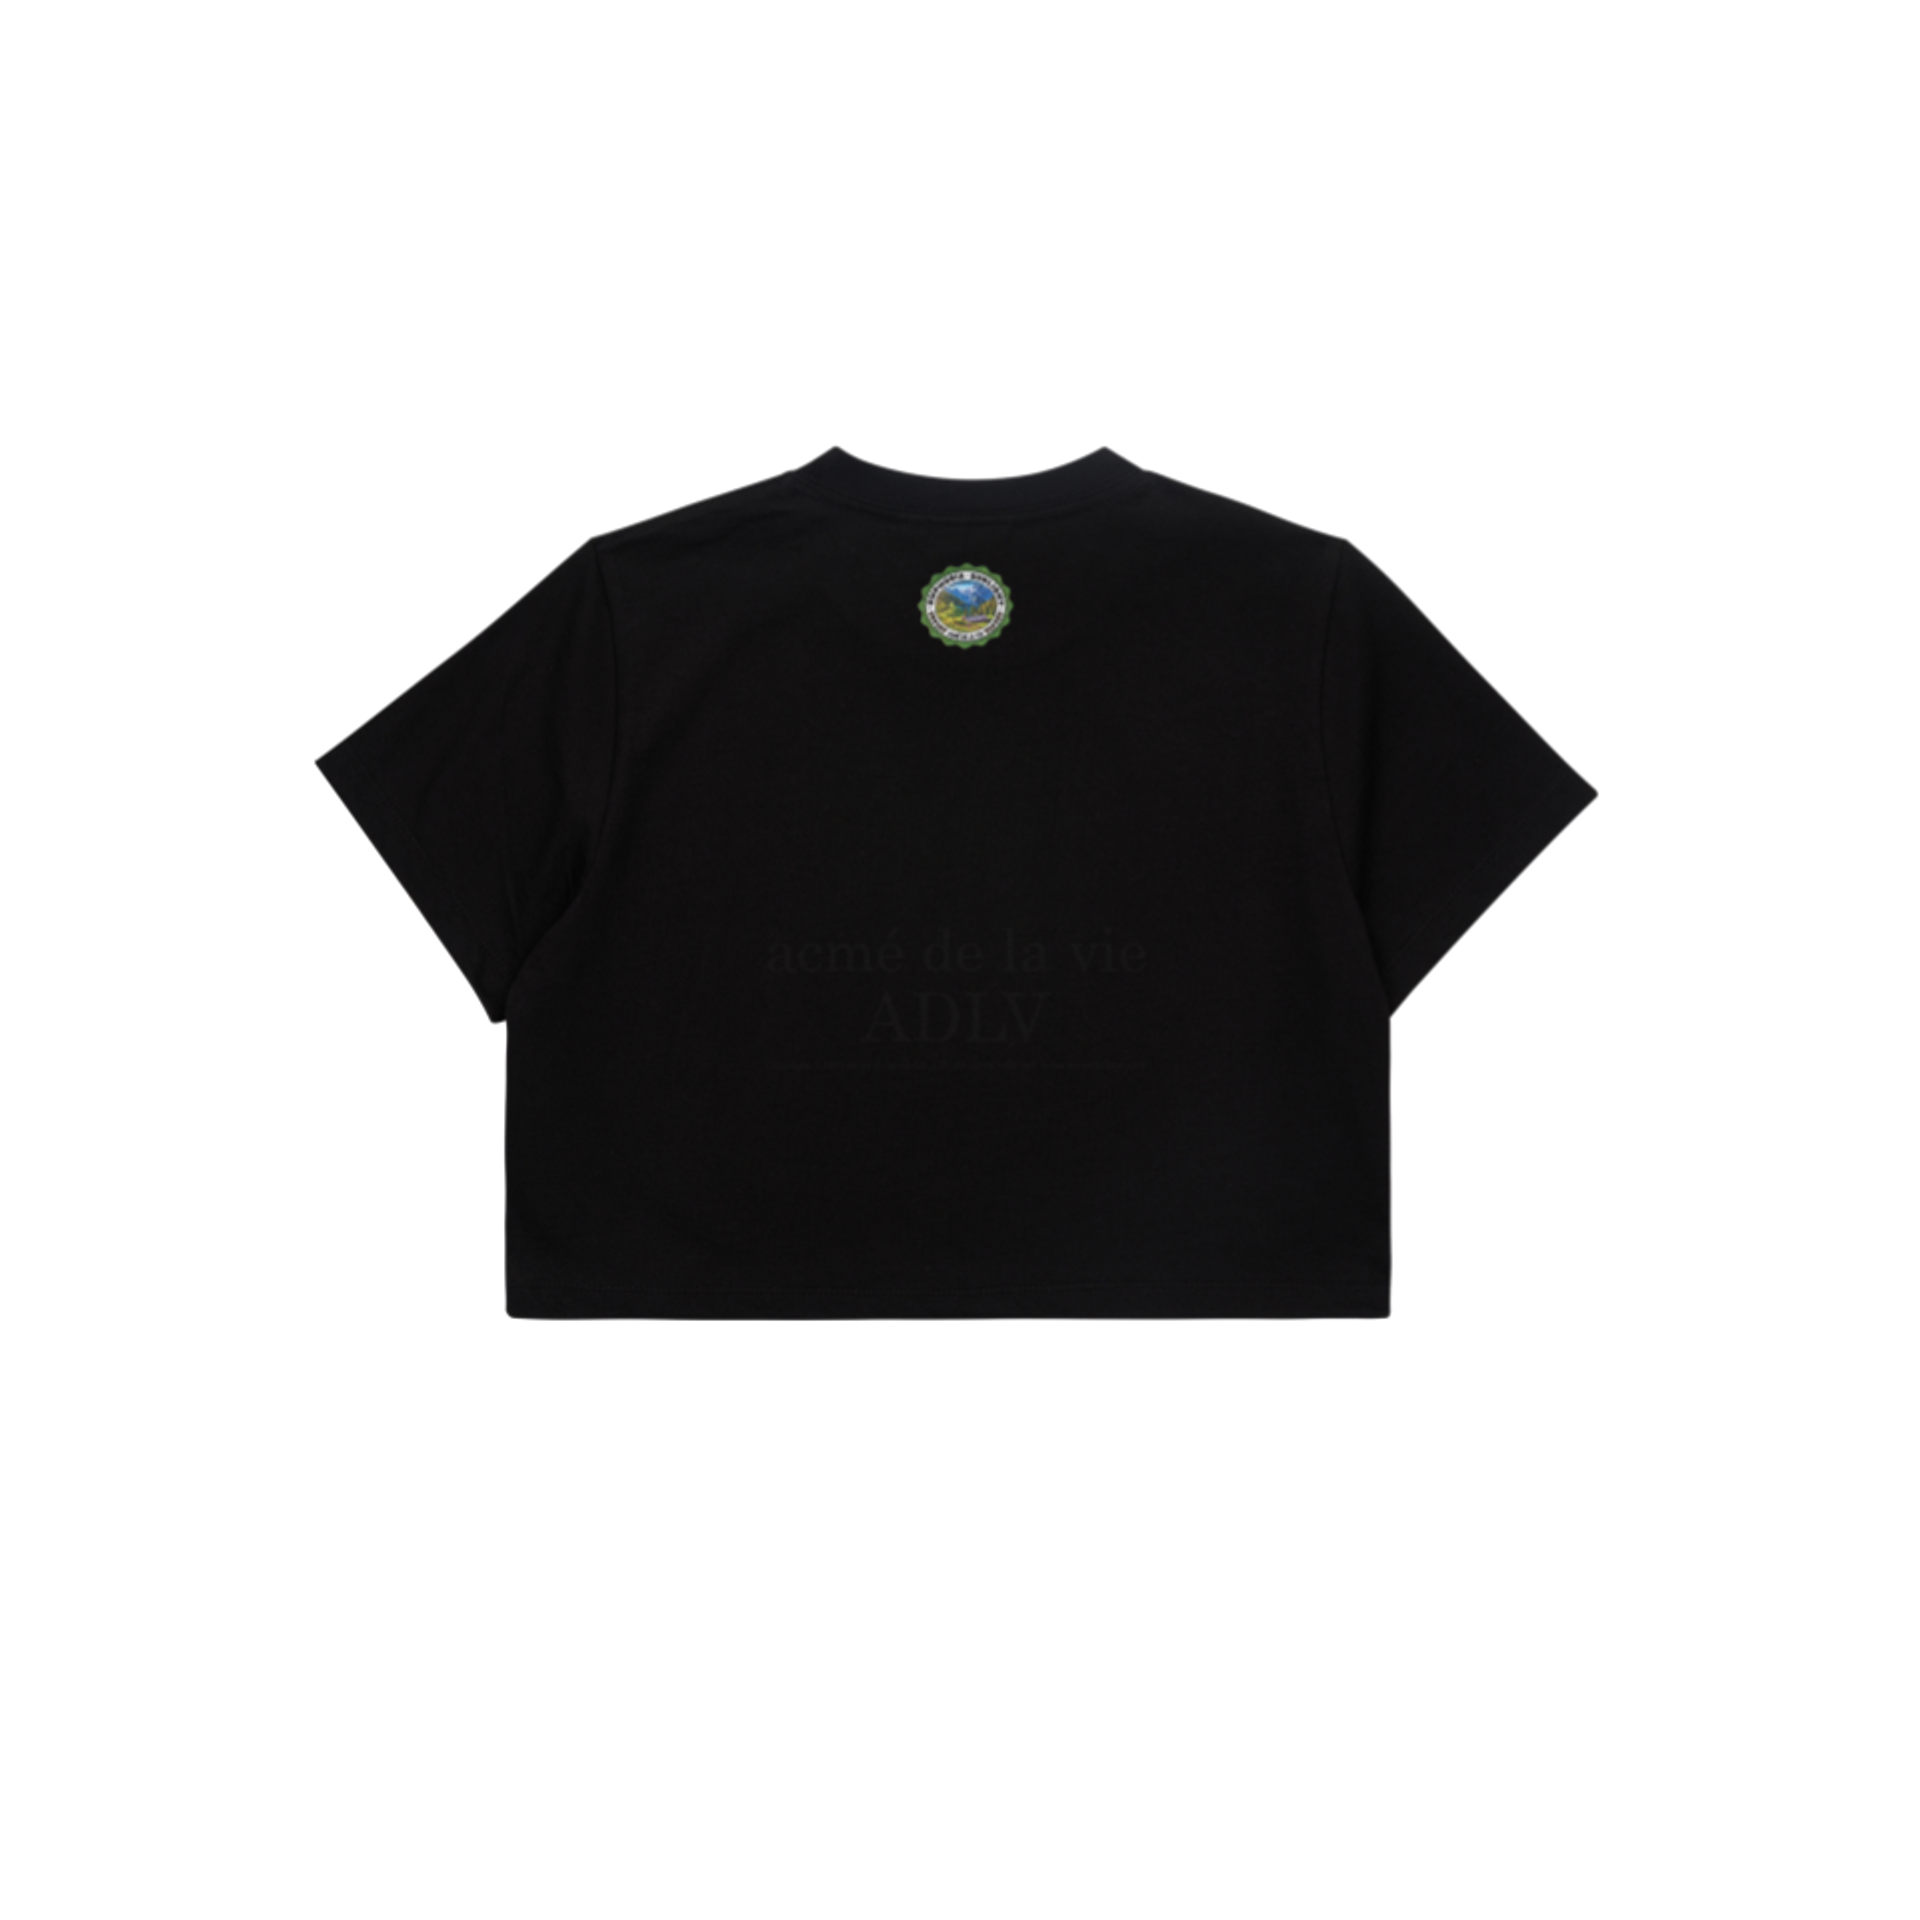 Acme De La Vie x LISA Greenery Artwork Crop Top Short Sleeve T-Shirt Black